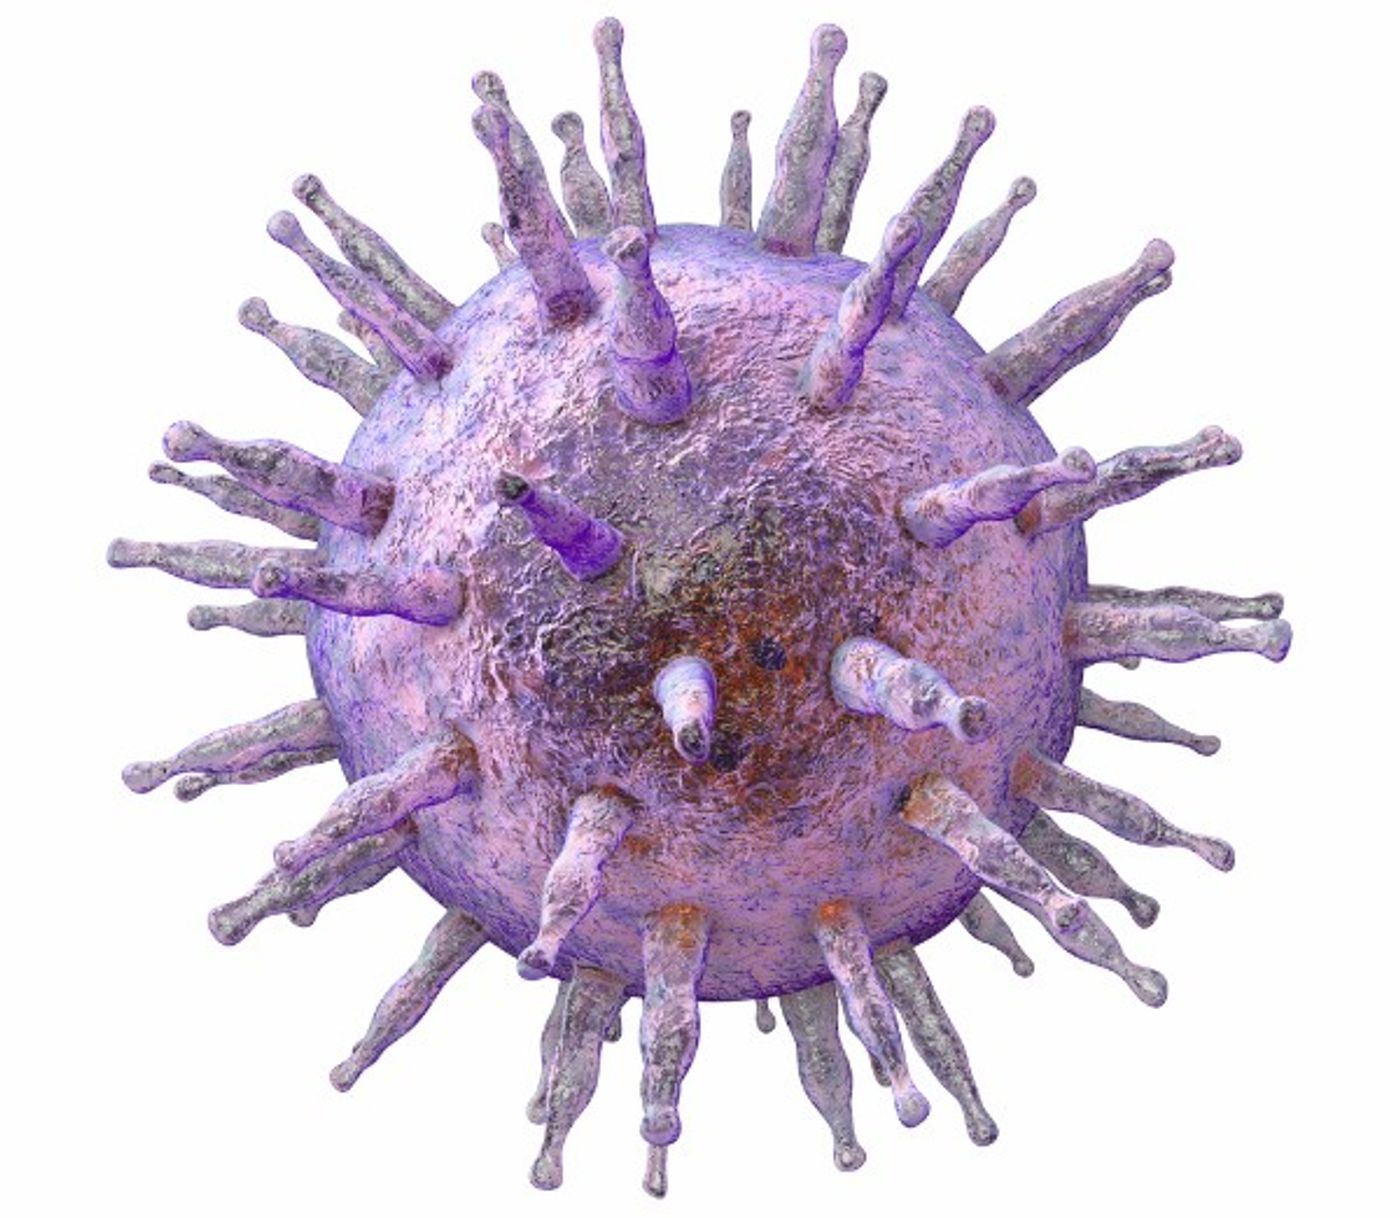 HCMV is a herpesvirus -Labiotech